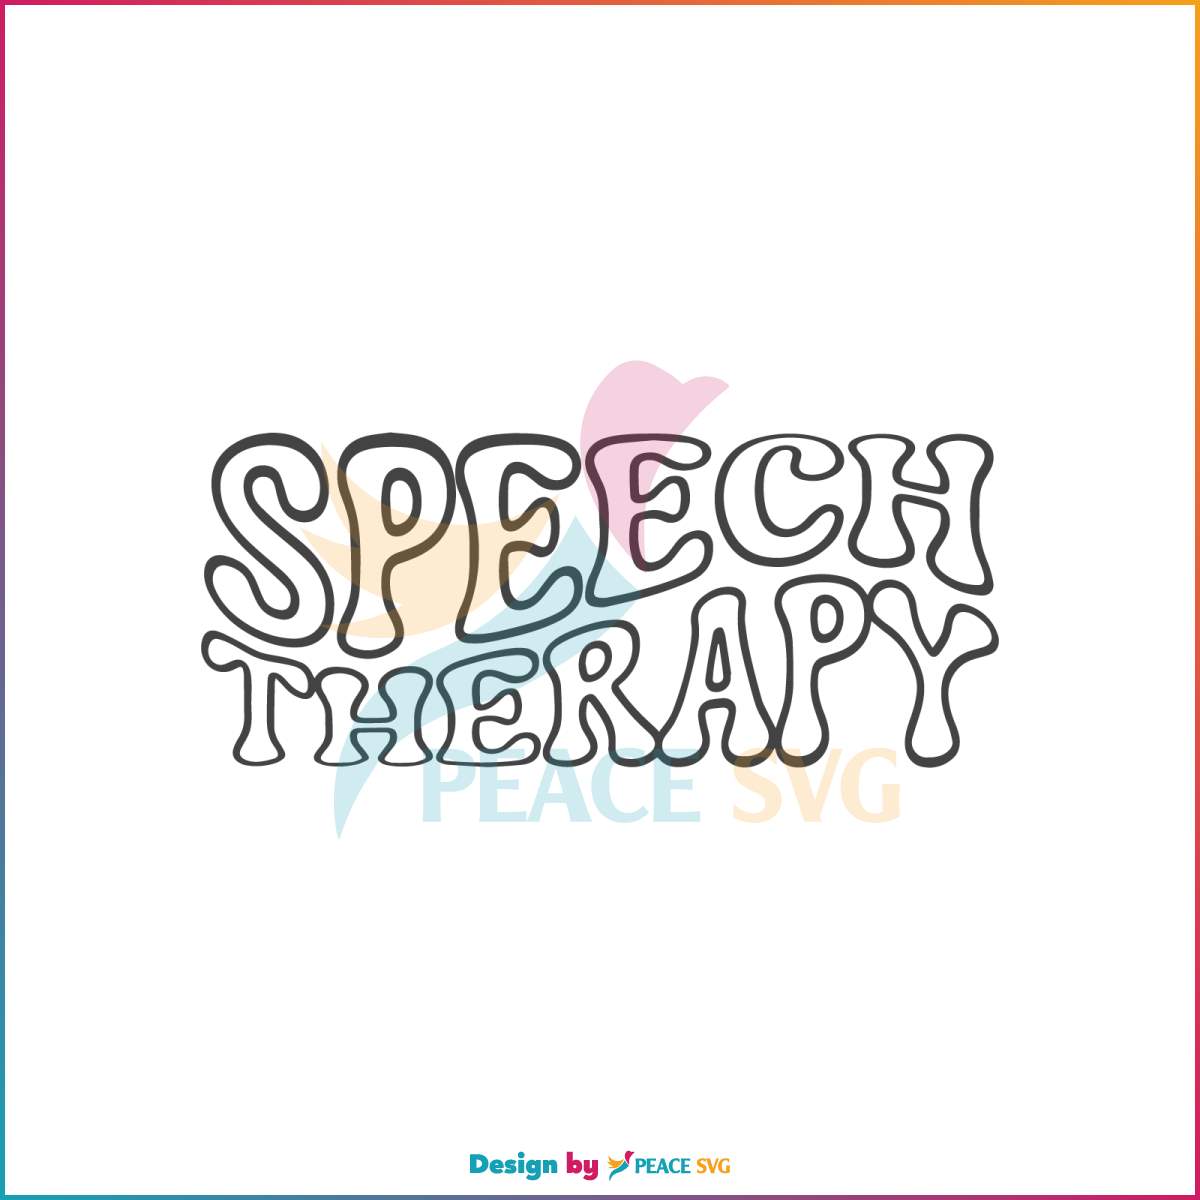 retro-speech-therapy-speech-pathologist-svg-cutting-file